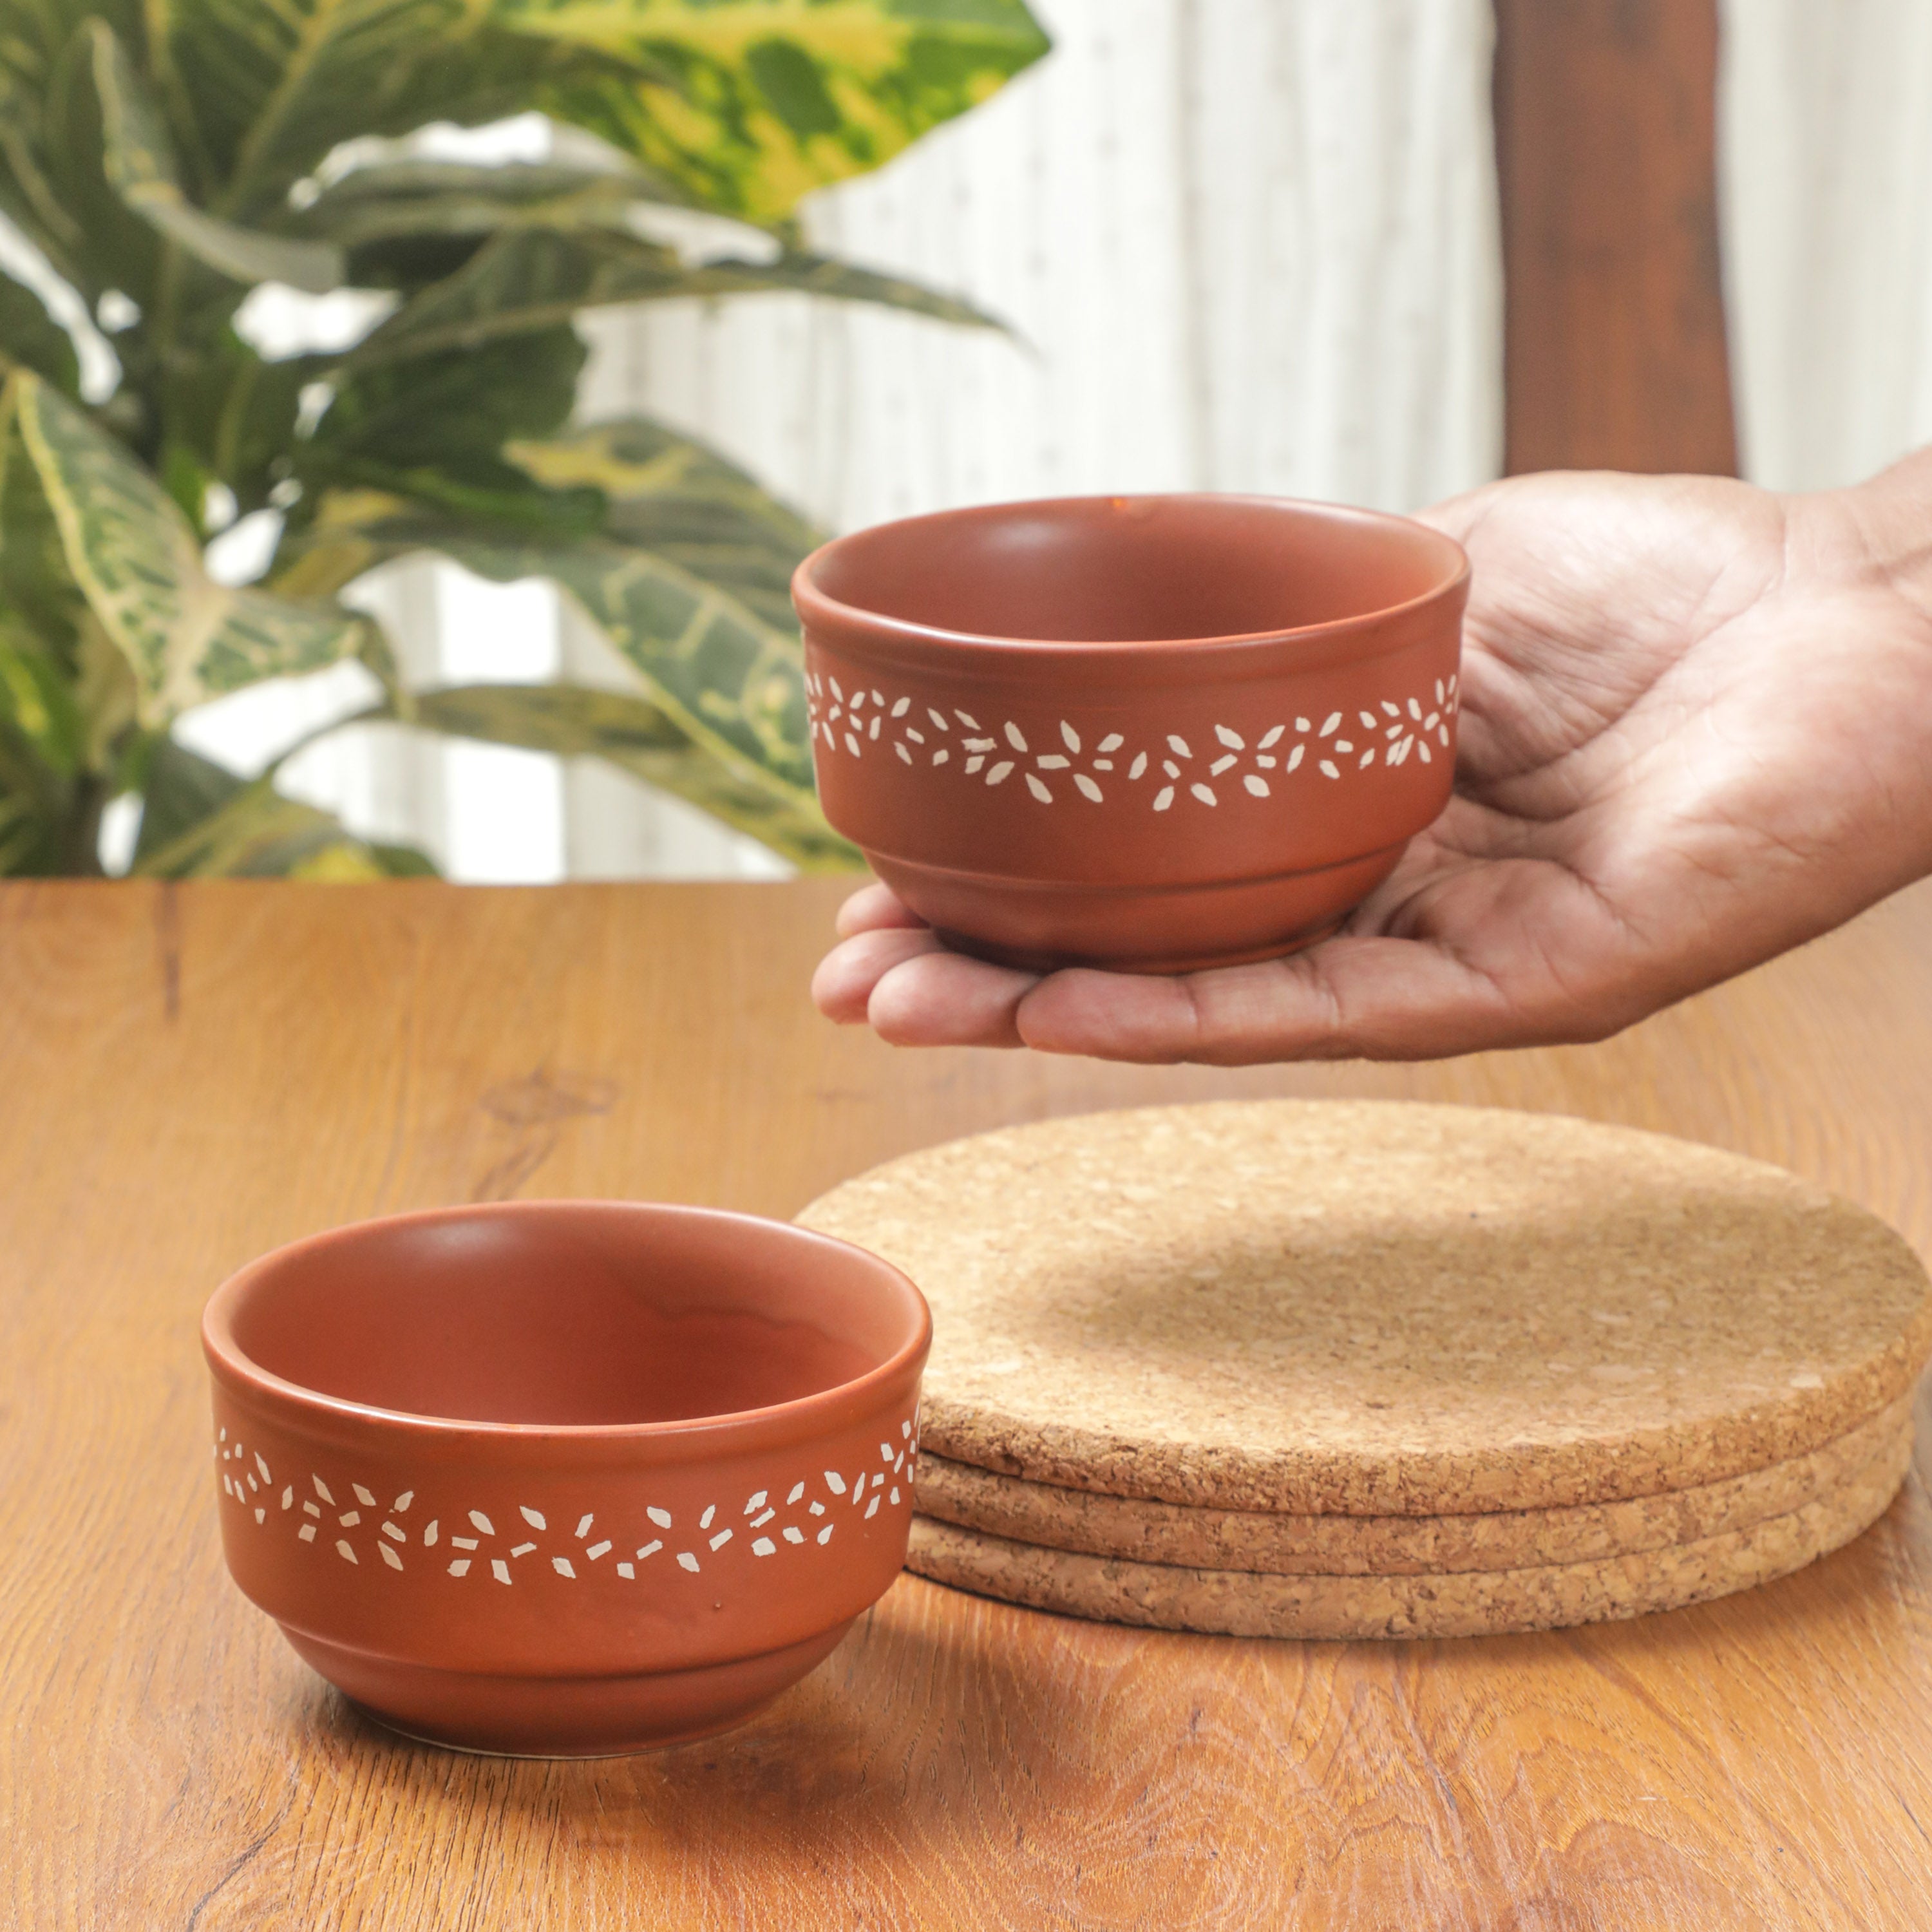 Soup Bowls For Serving Sumptuous Liquids - Times of India (March